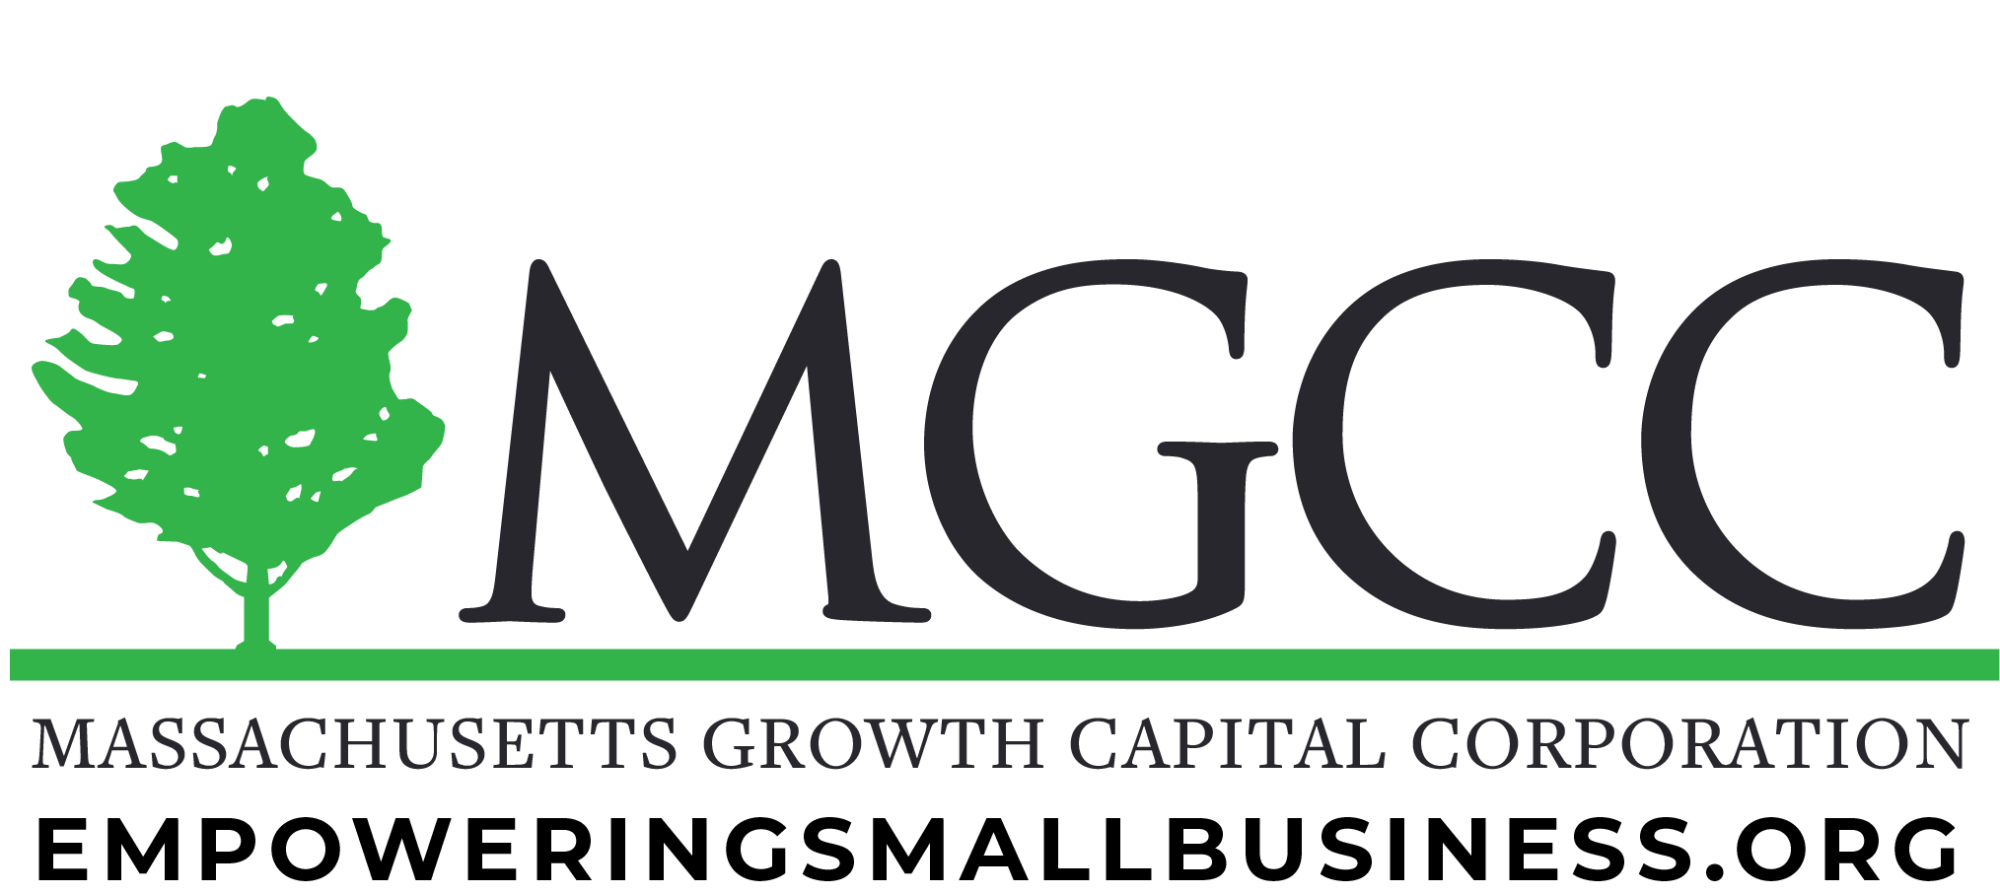 MGCC Logo